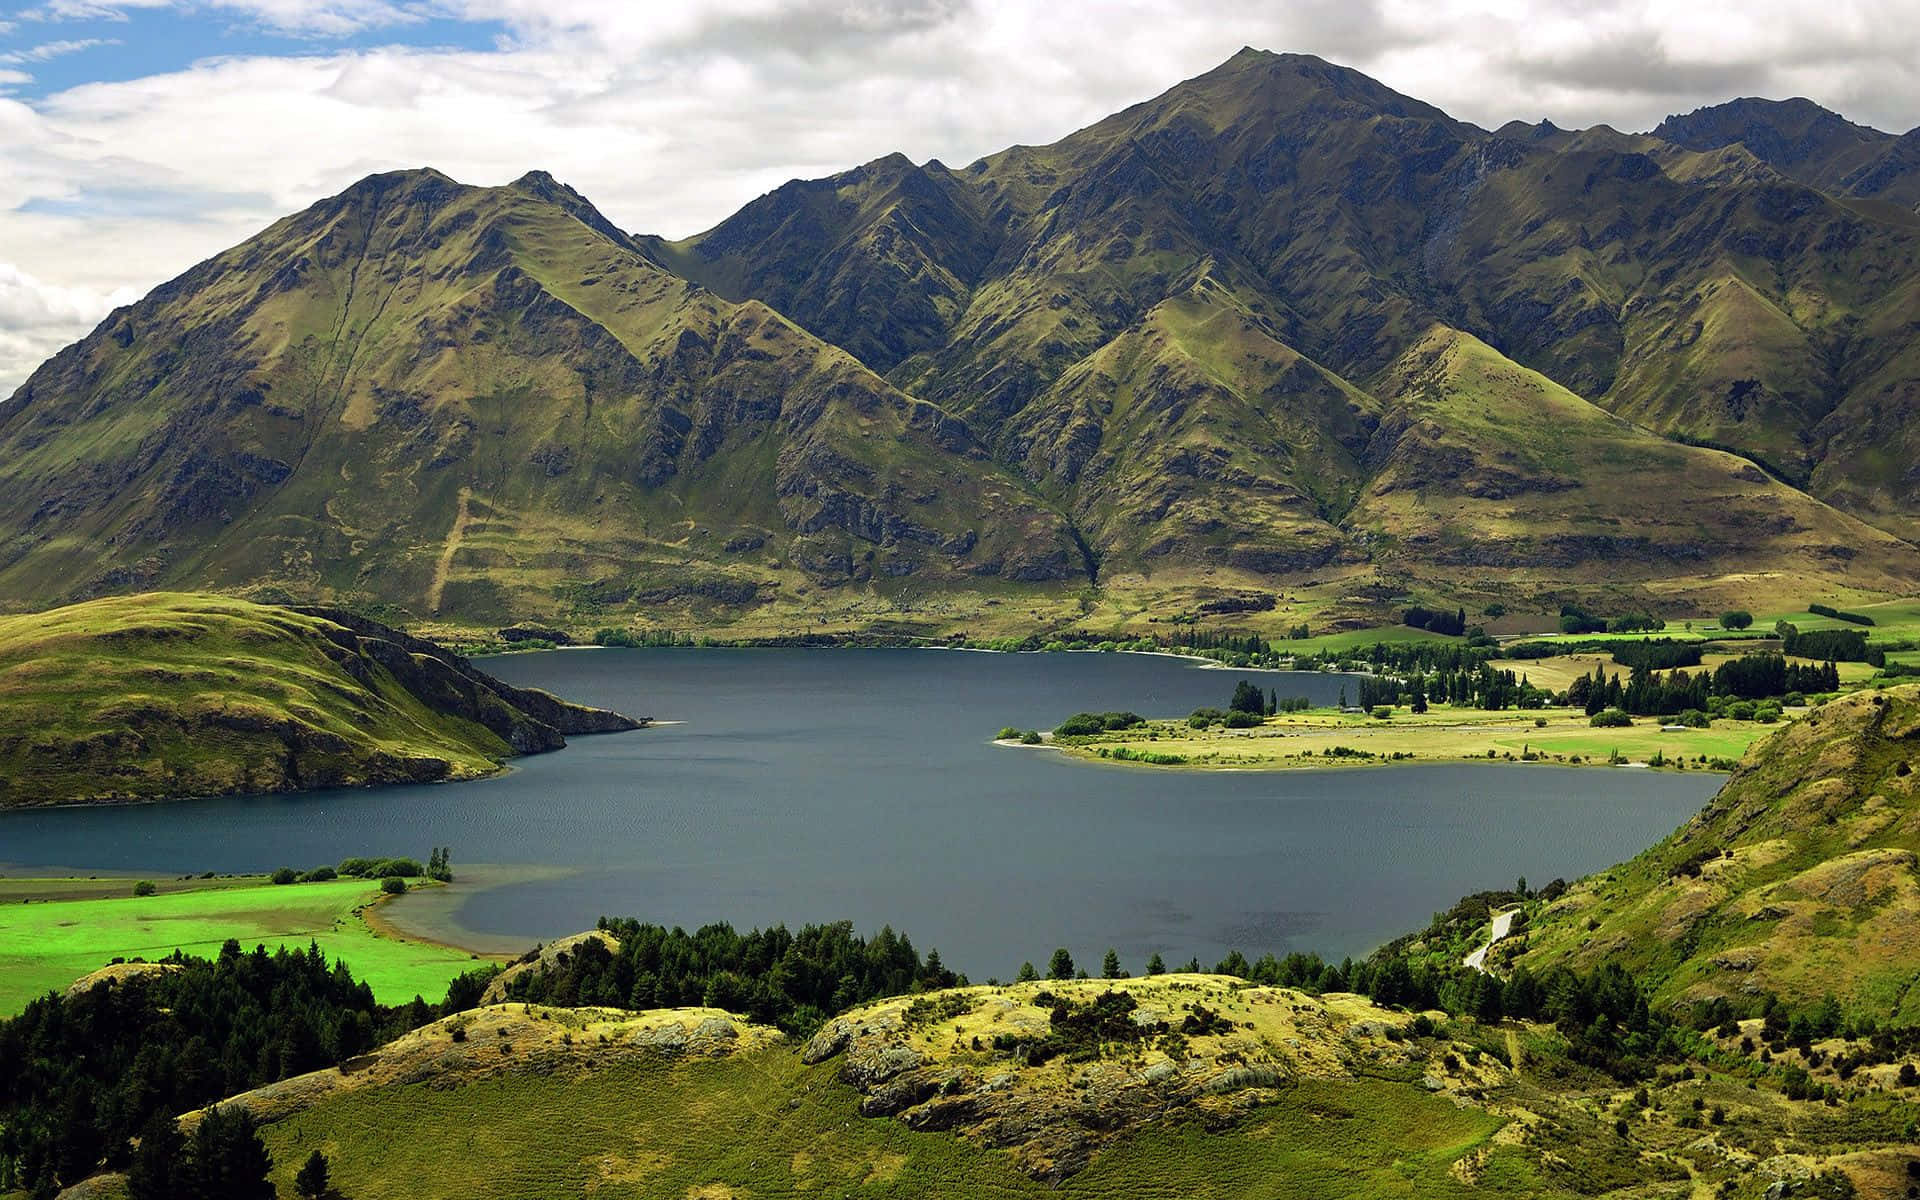 A Lush Green New Zealand Mountain Range